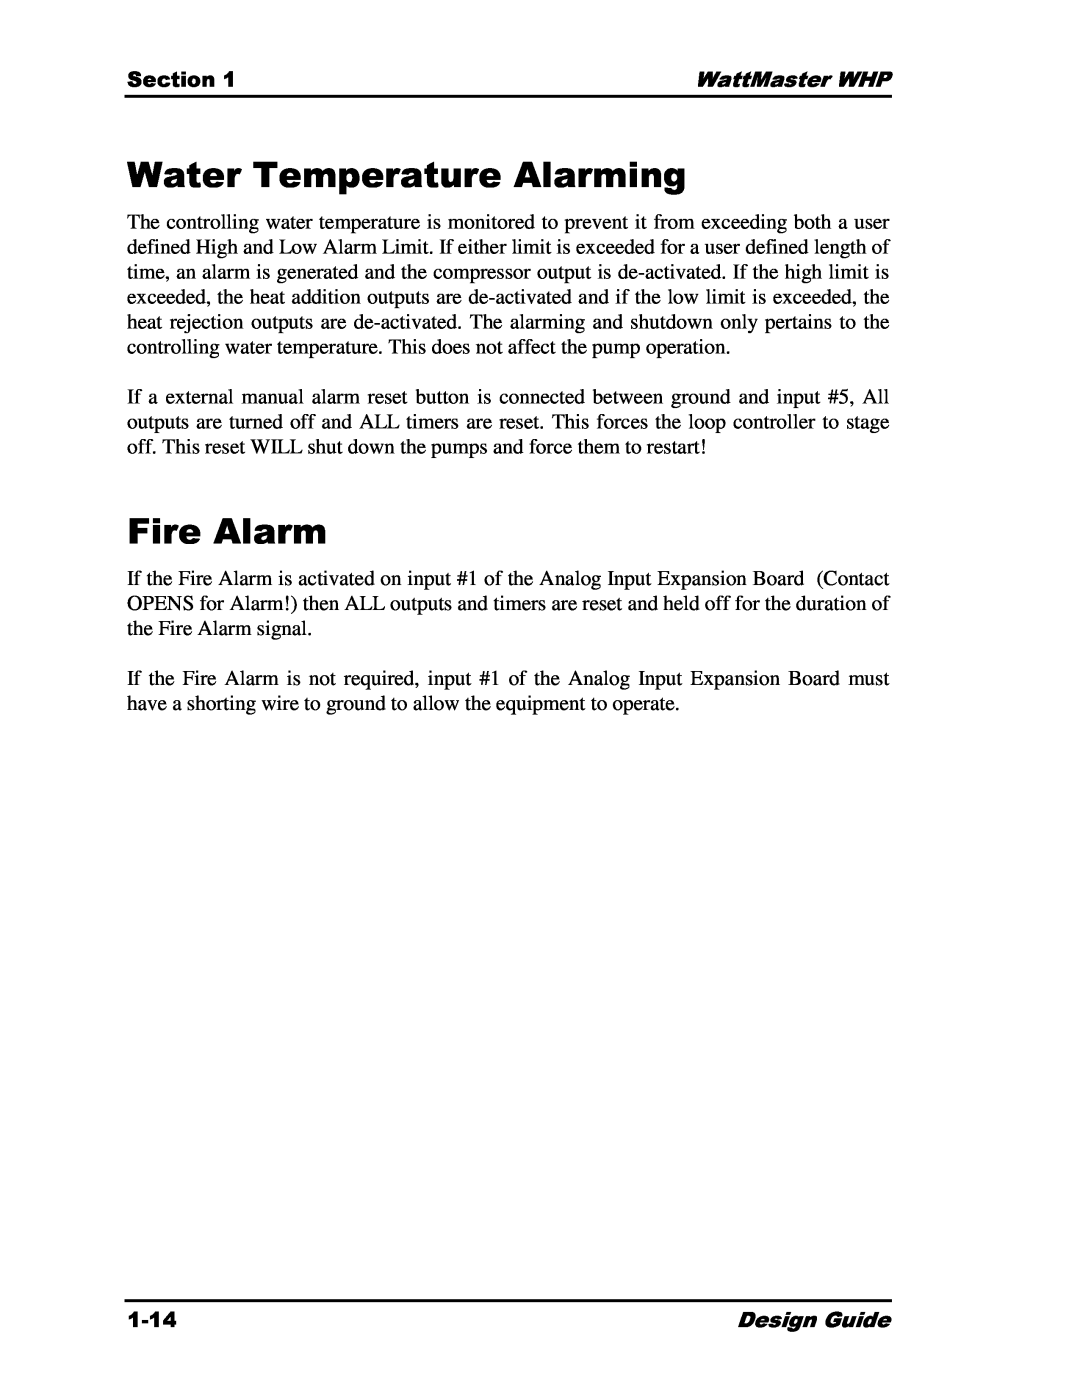 Heat Controller Water Source Heat Pump Water Temperature Alarming, Fire Alarm, Section, WattMaster WHP, 1-14, Design Guide 